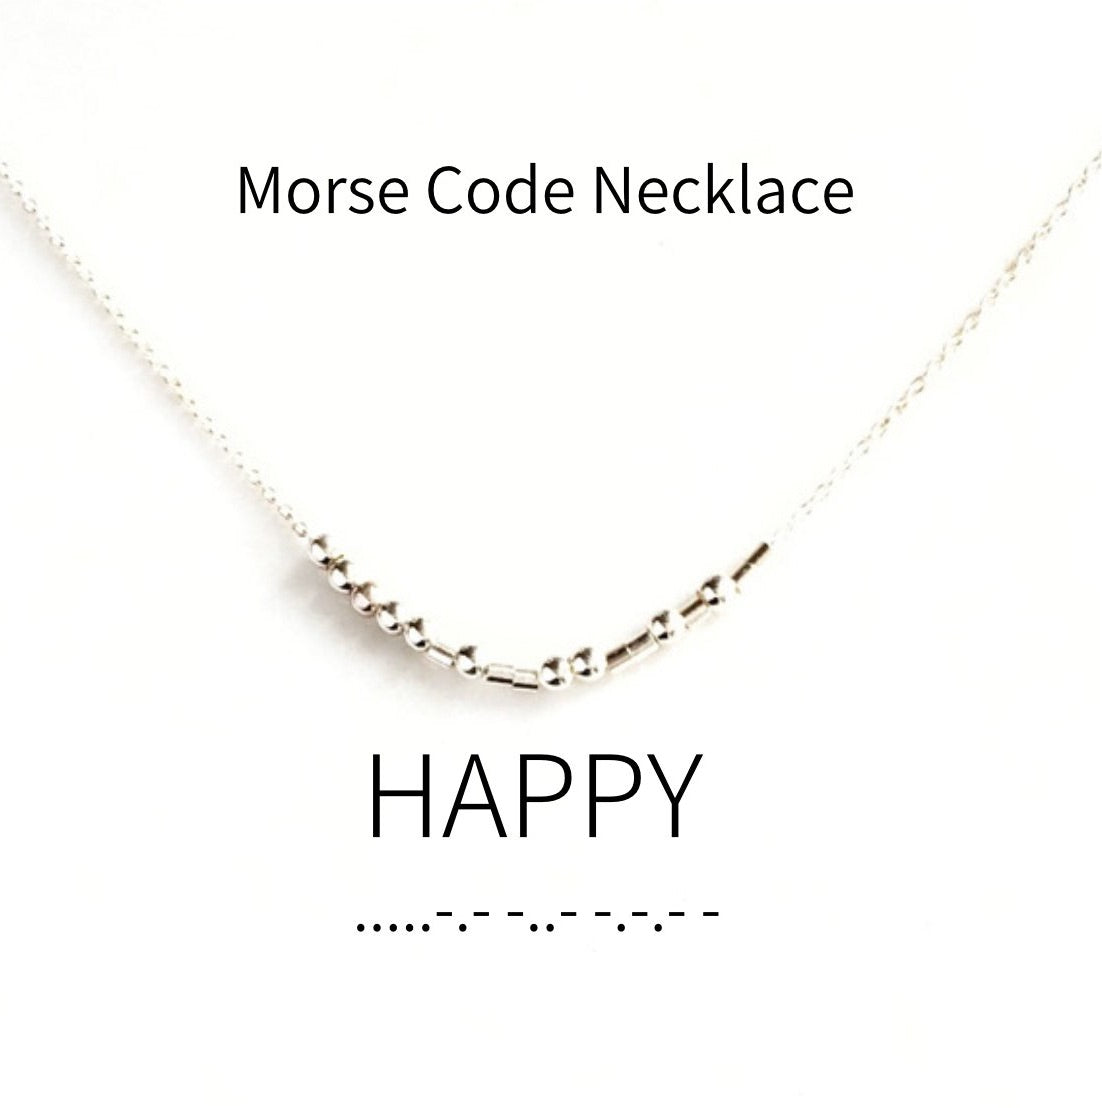 Happy Morse Code